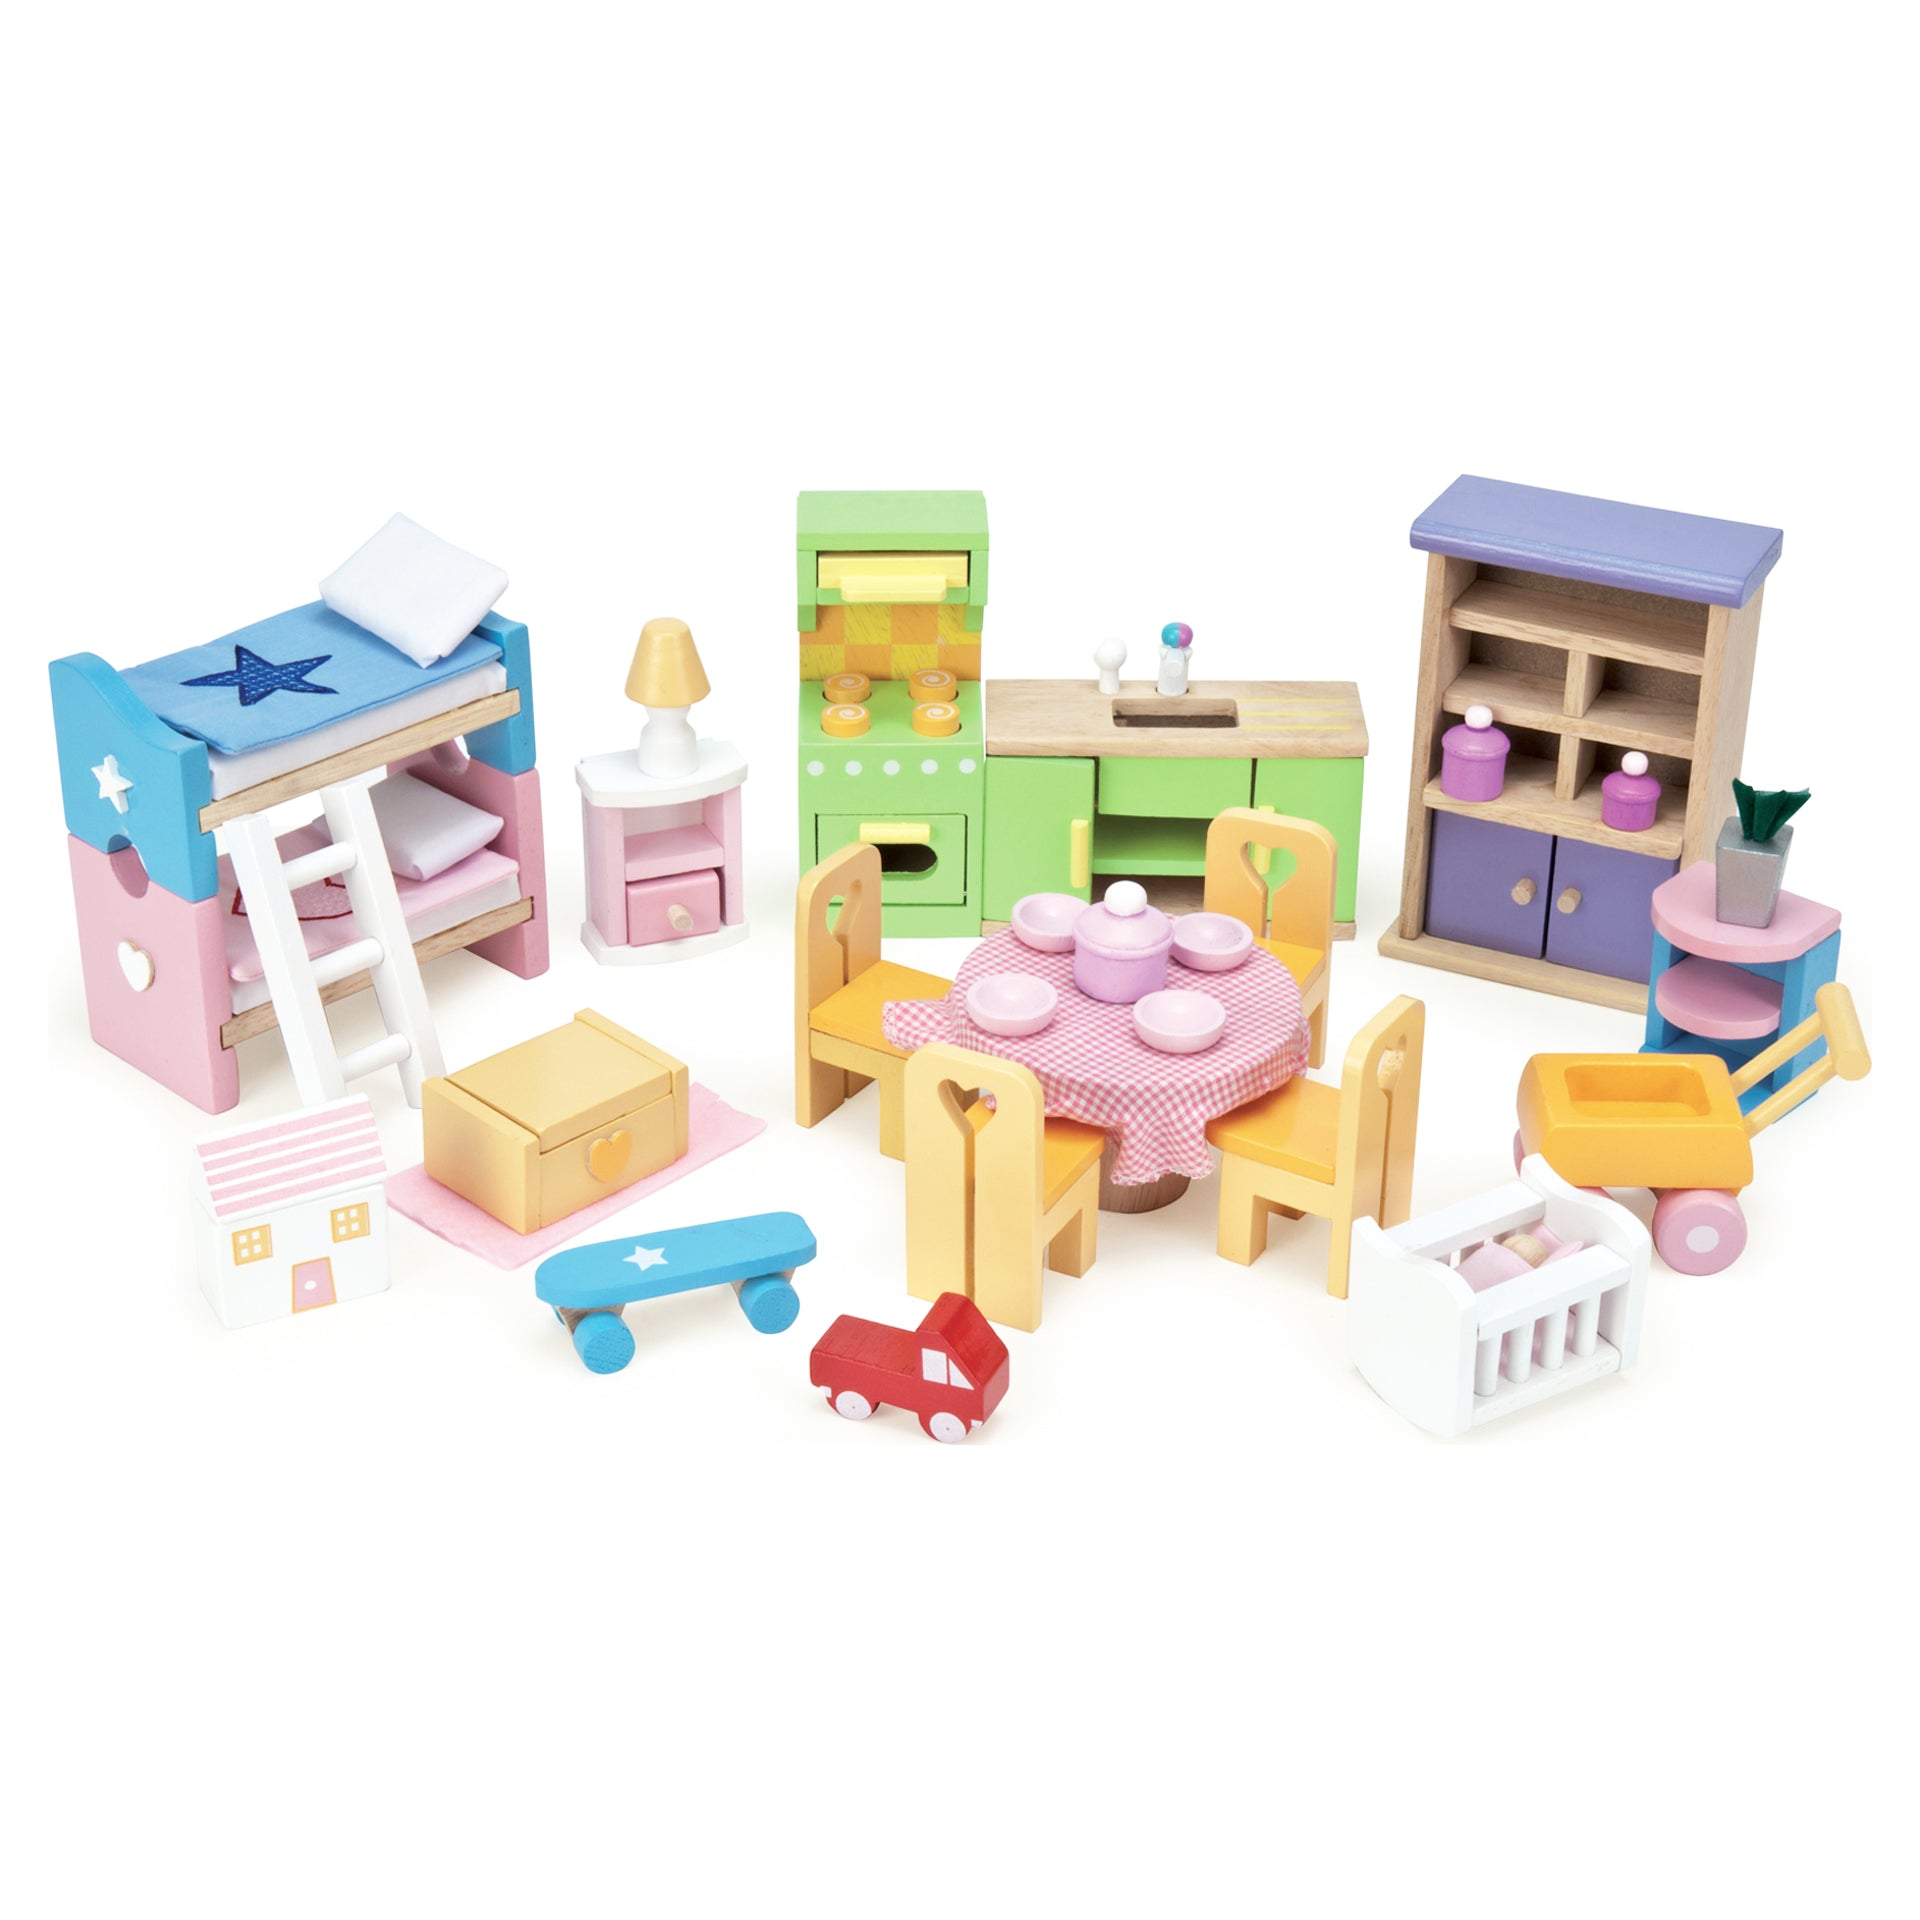 Le Toy Van - Furniture set